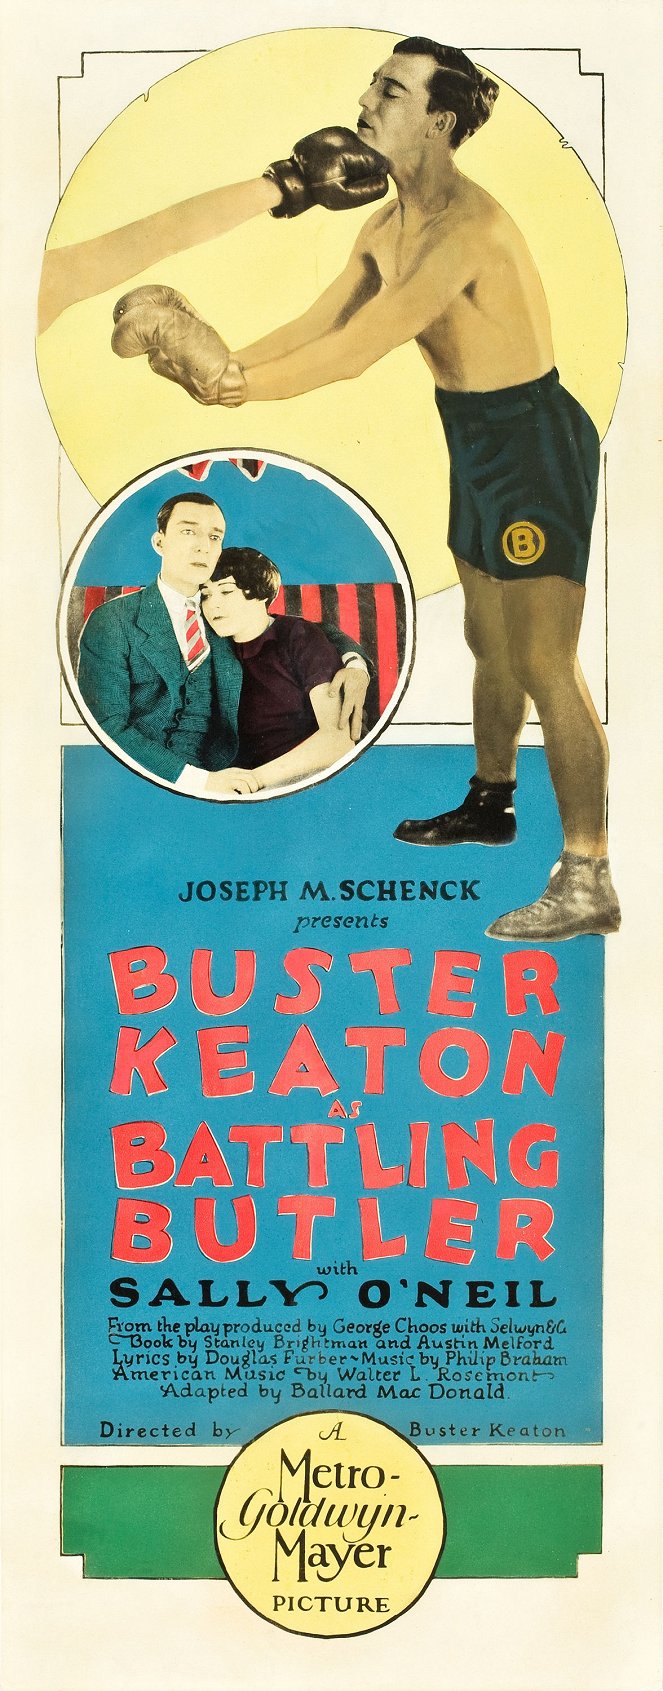 Battling Butler - Posters